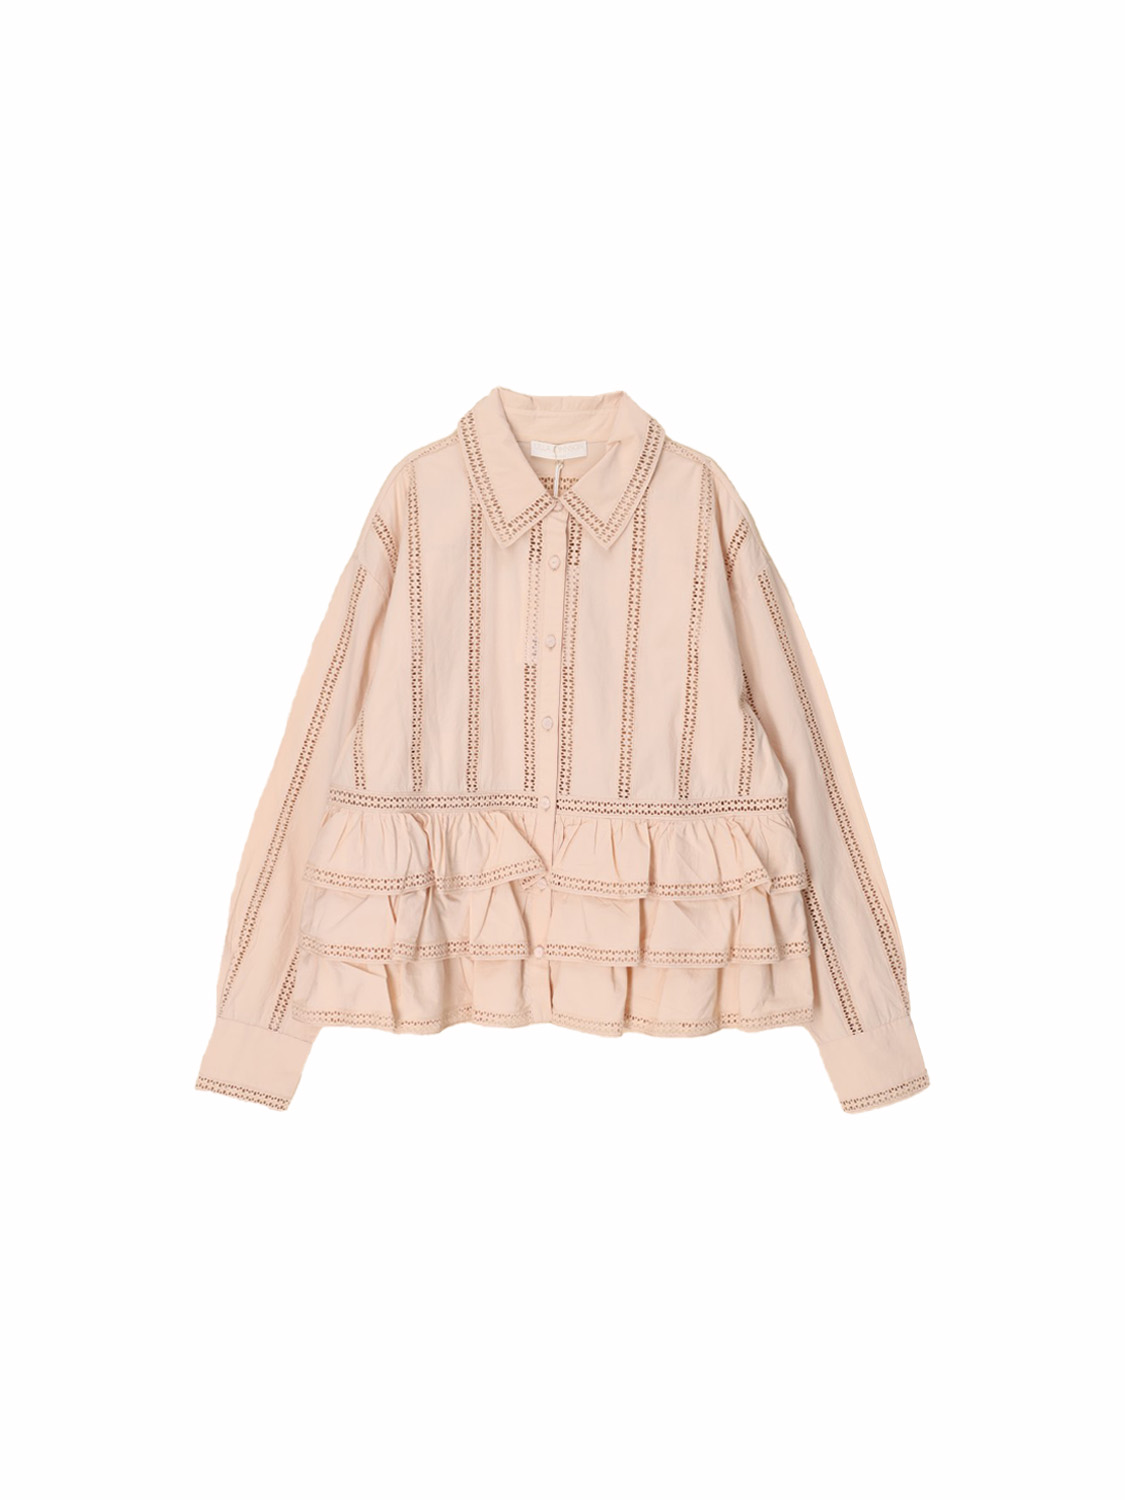 Harper cotton blouse with openwork pattern